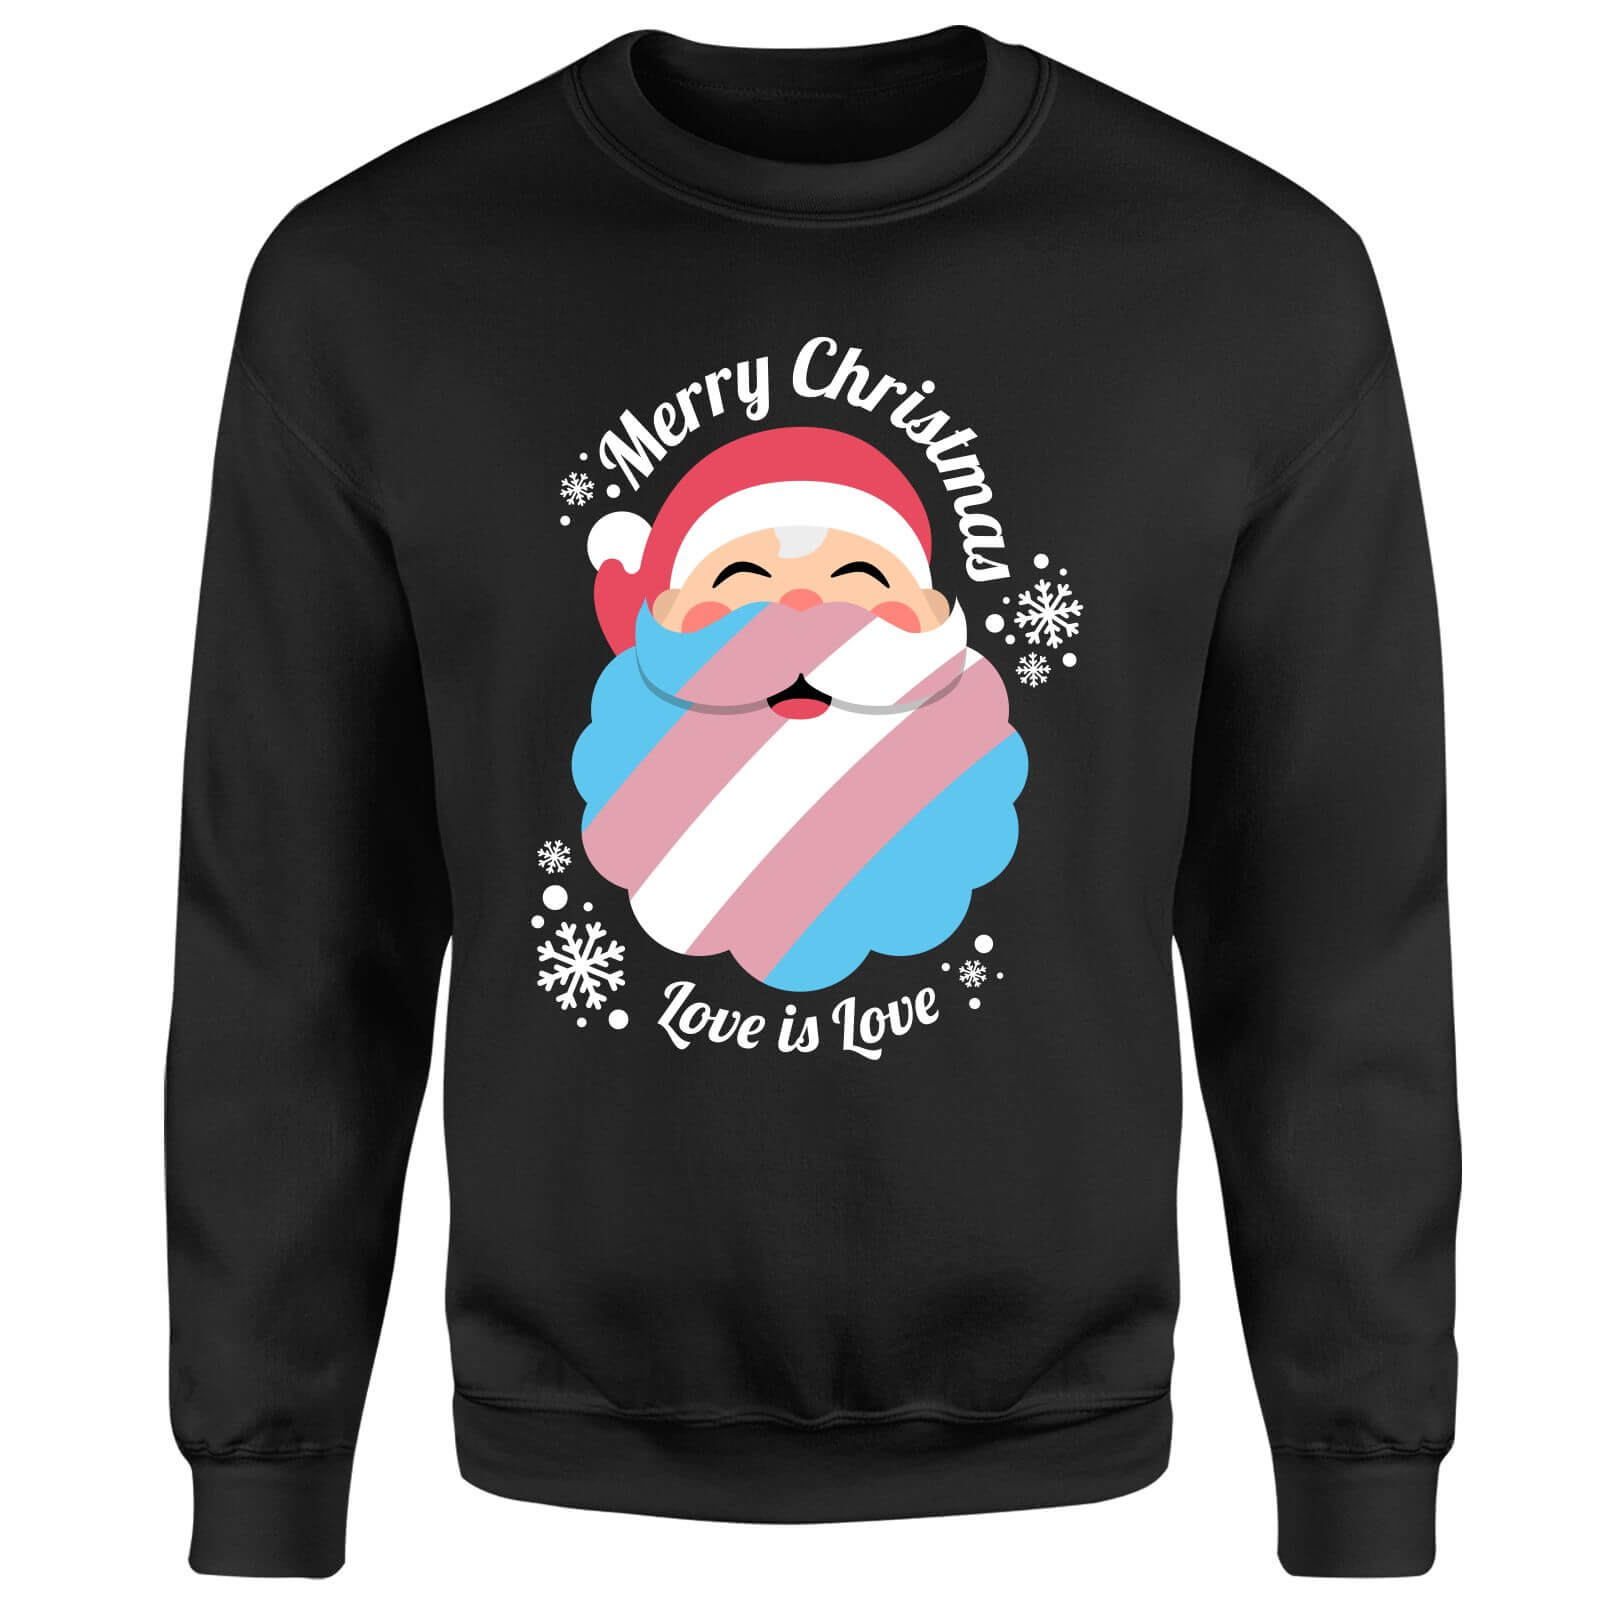 LGBTQ+ Trans Positive Christmas Unisex Sweatshirt - Black - S - Black